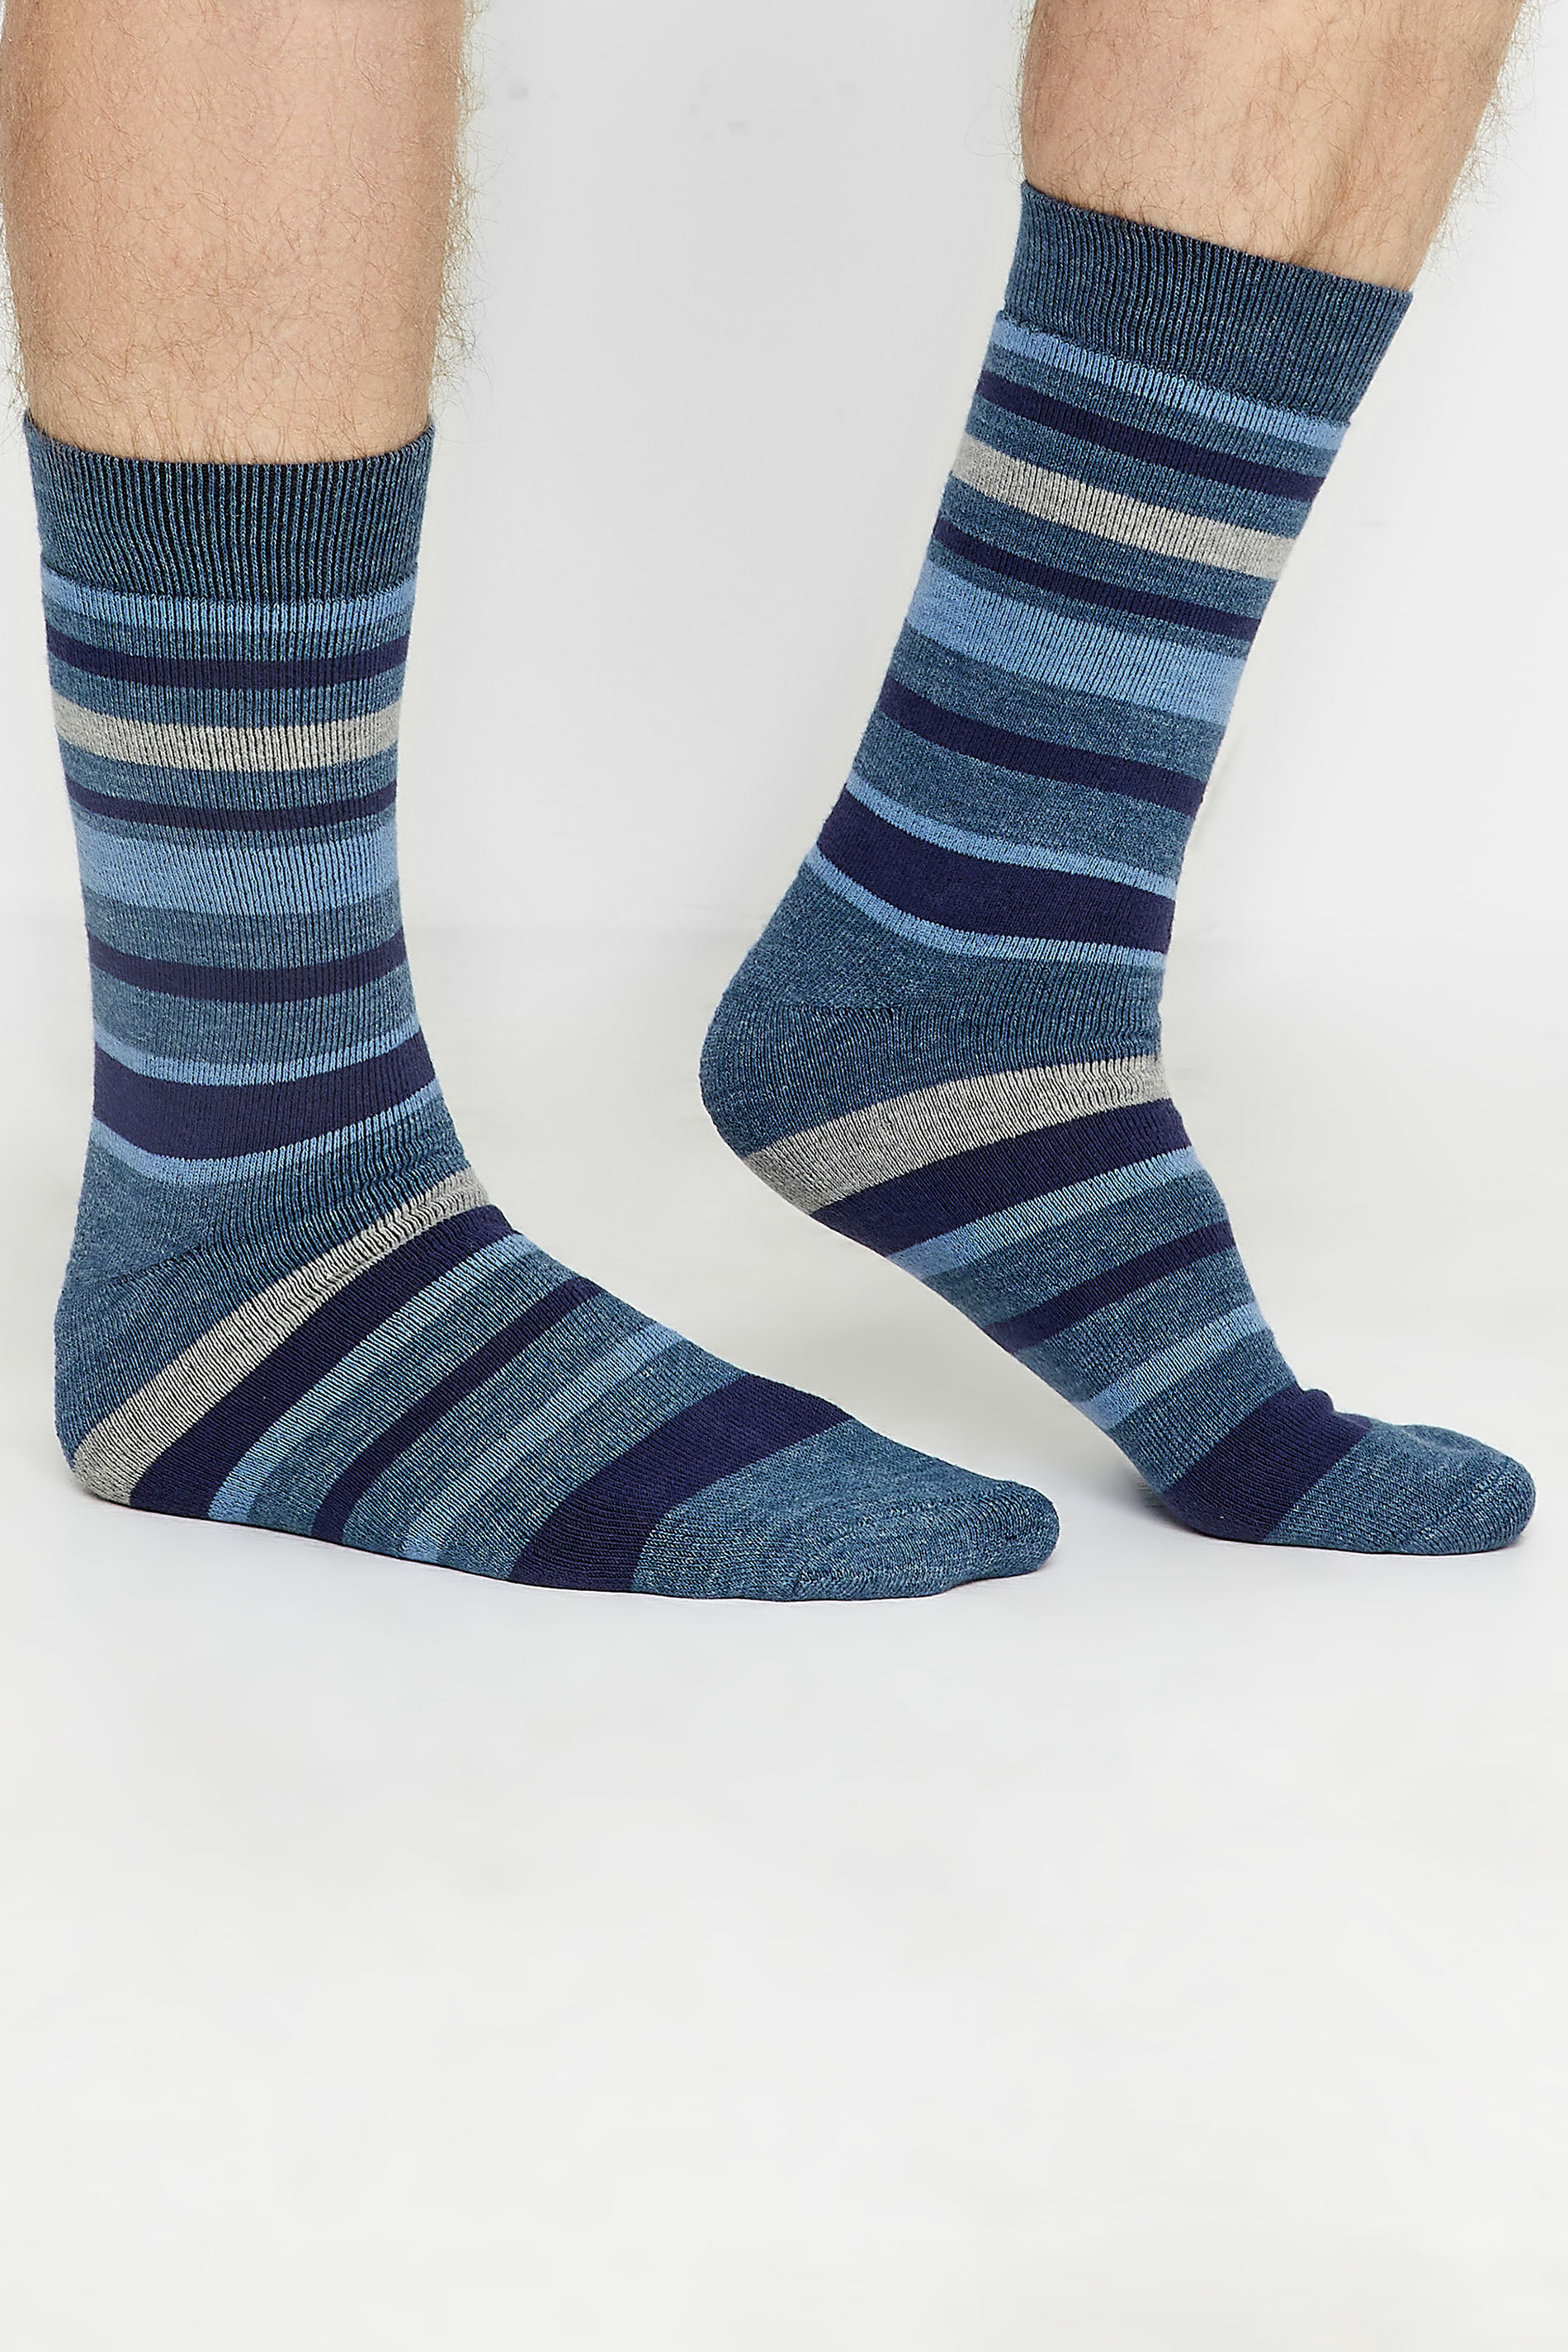 BadRhino Blue Striped 3 Pack Thermal Socks | BadRhino 2